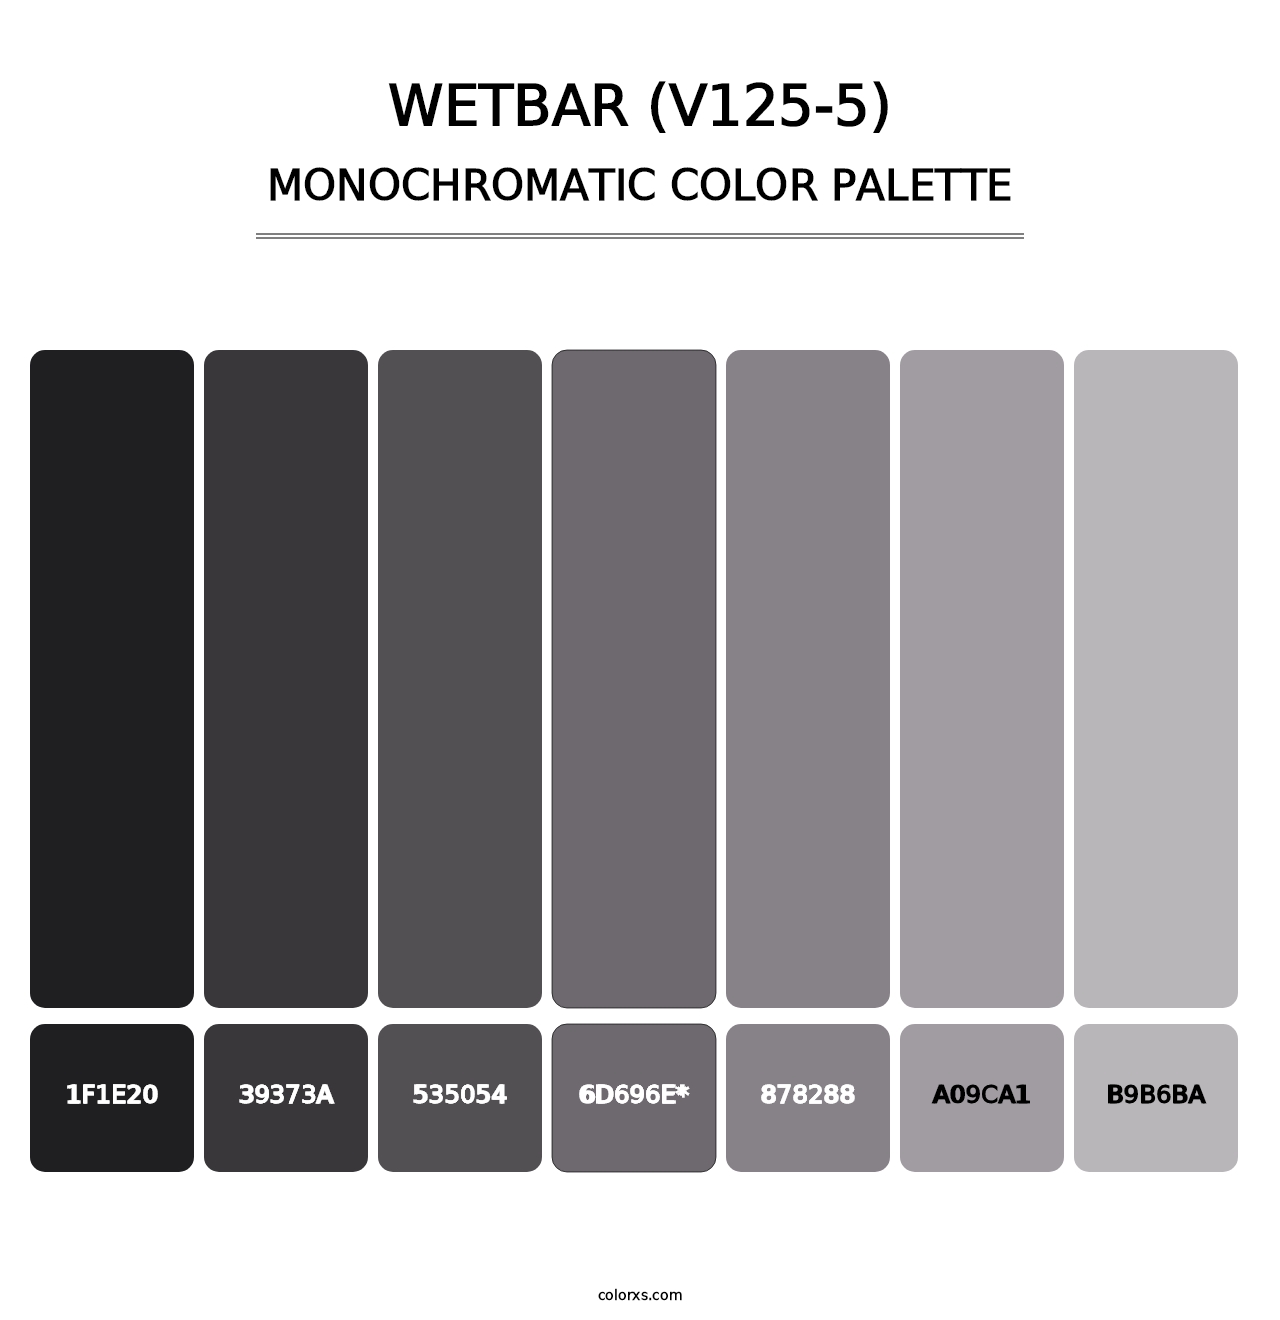 Wetbar (V125-5) - Monochromatic Color Palette